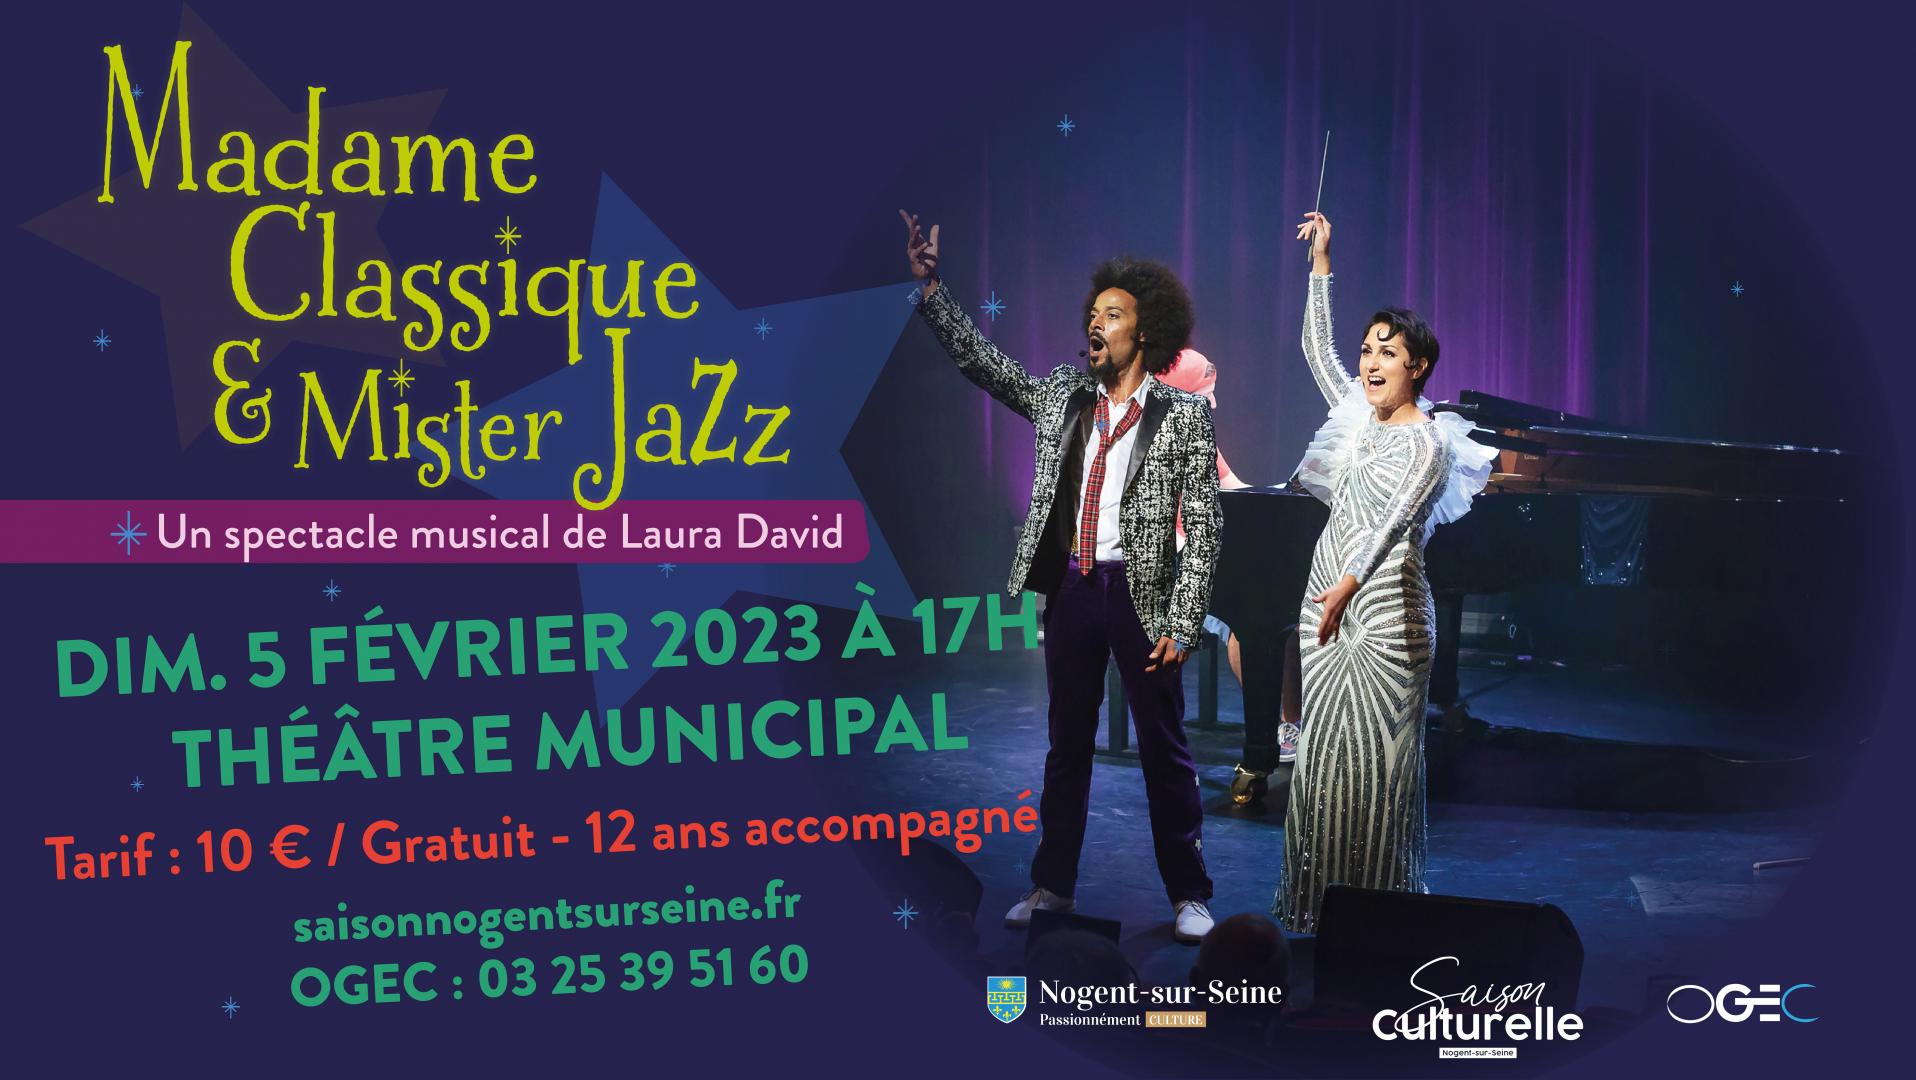 Madame Classique & Mister Jazz